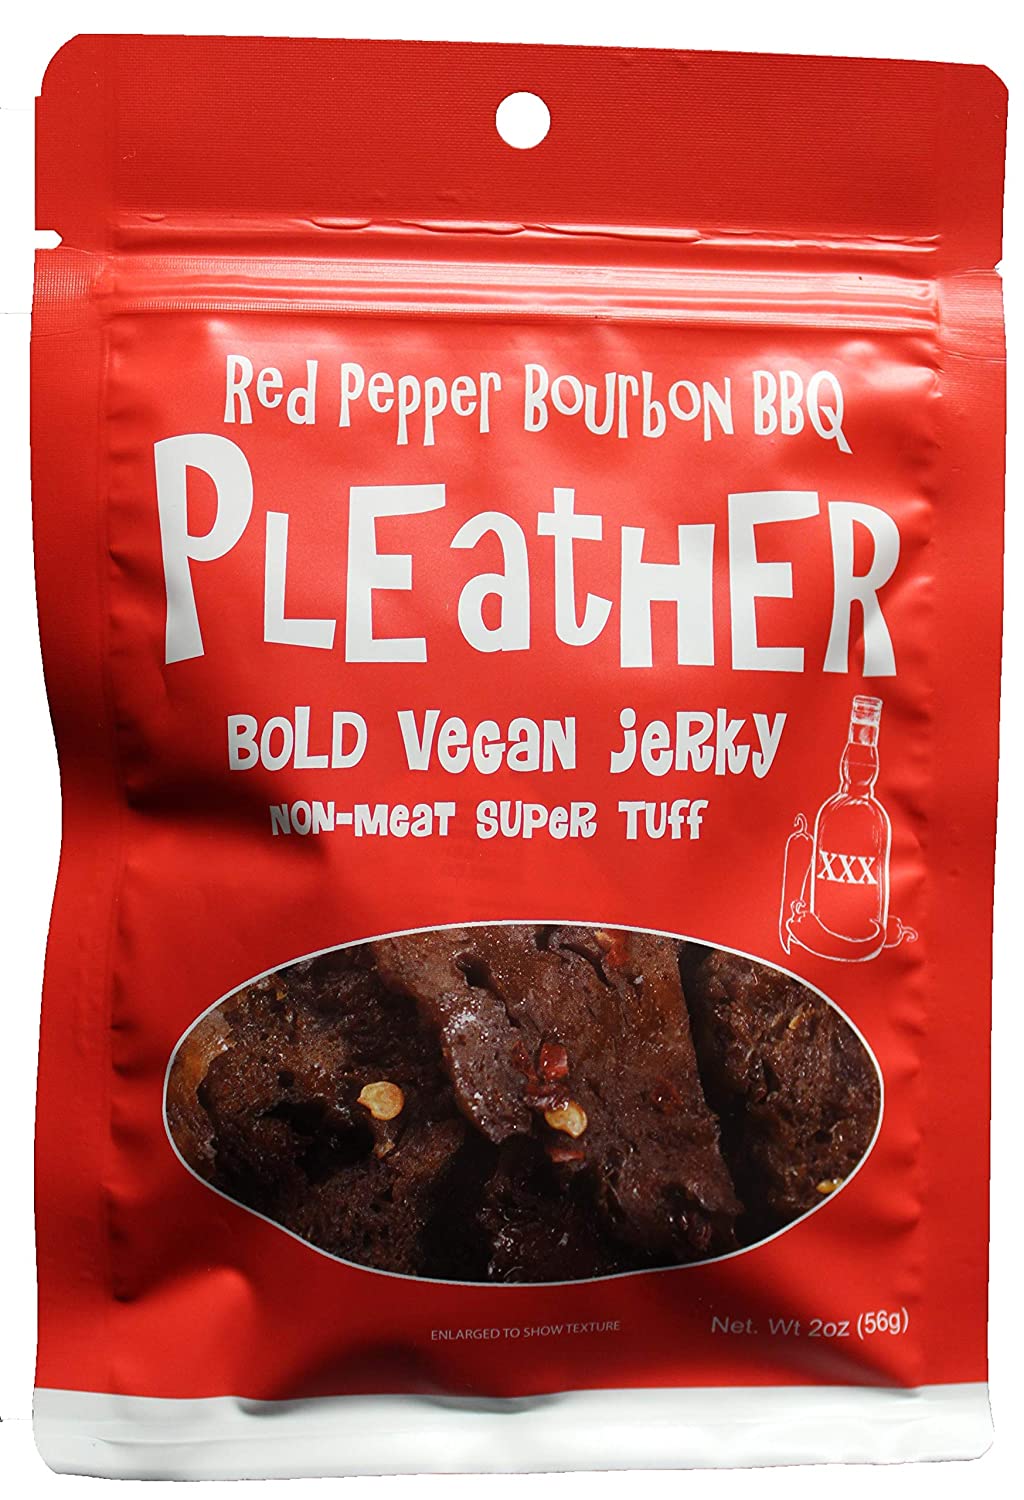 Red Pepper Bourbon BBQ Vegan Jerky